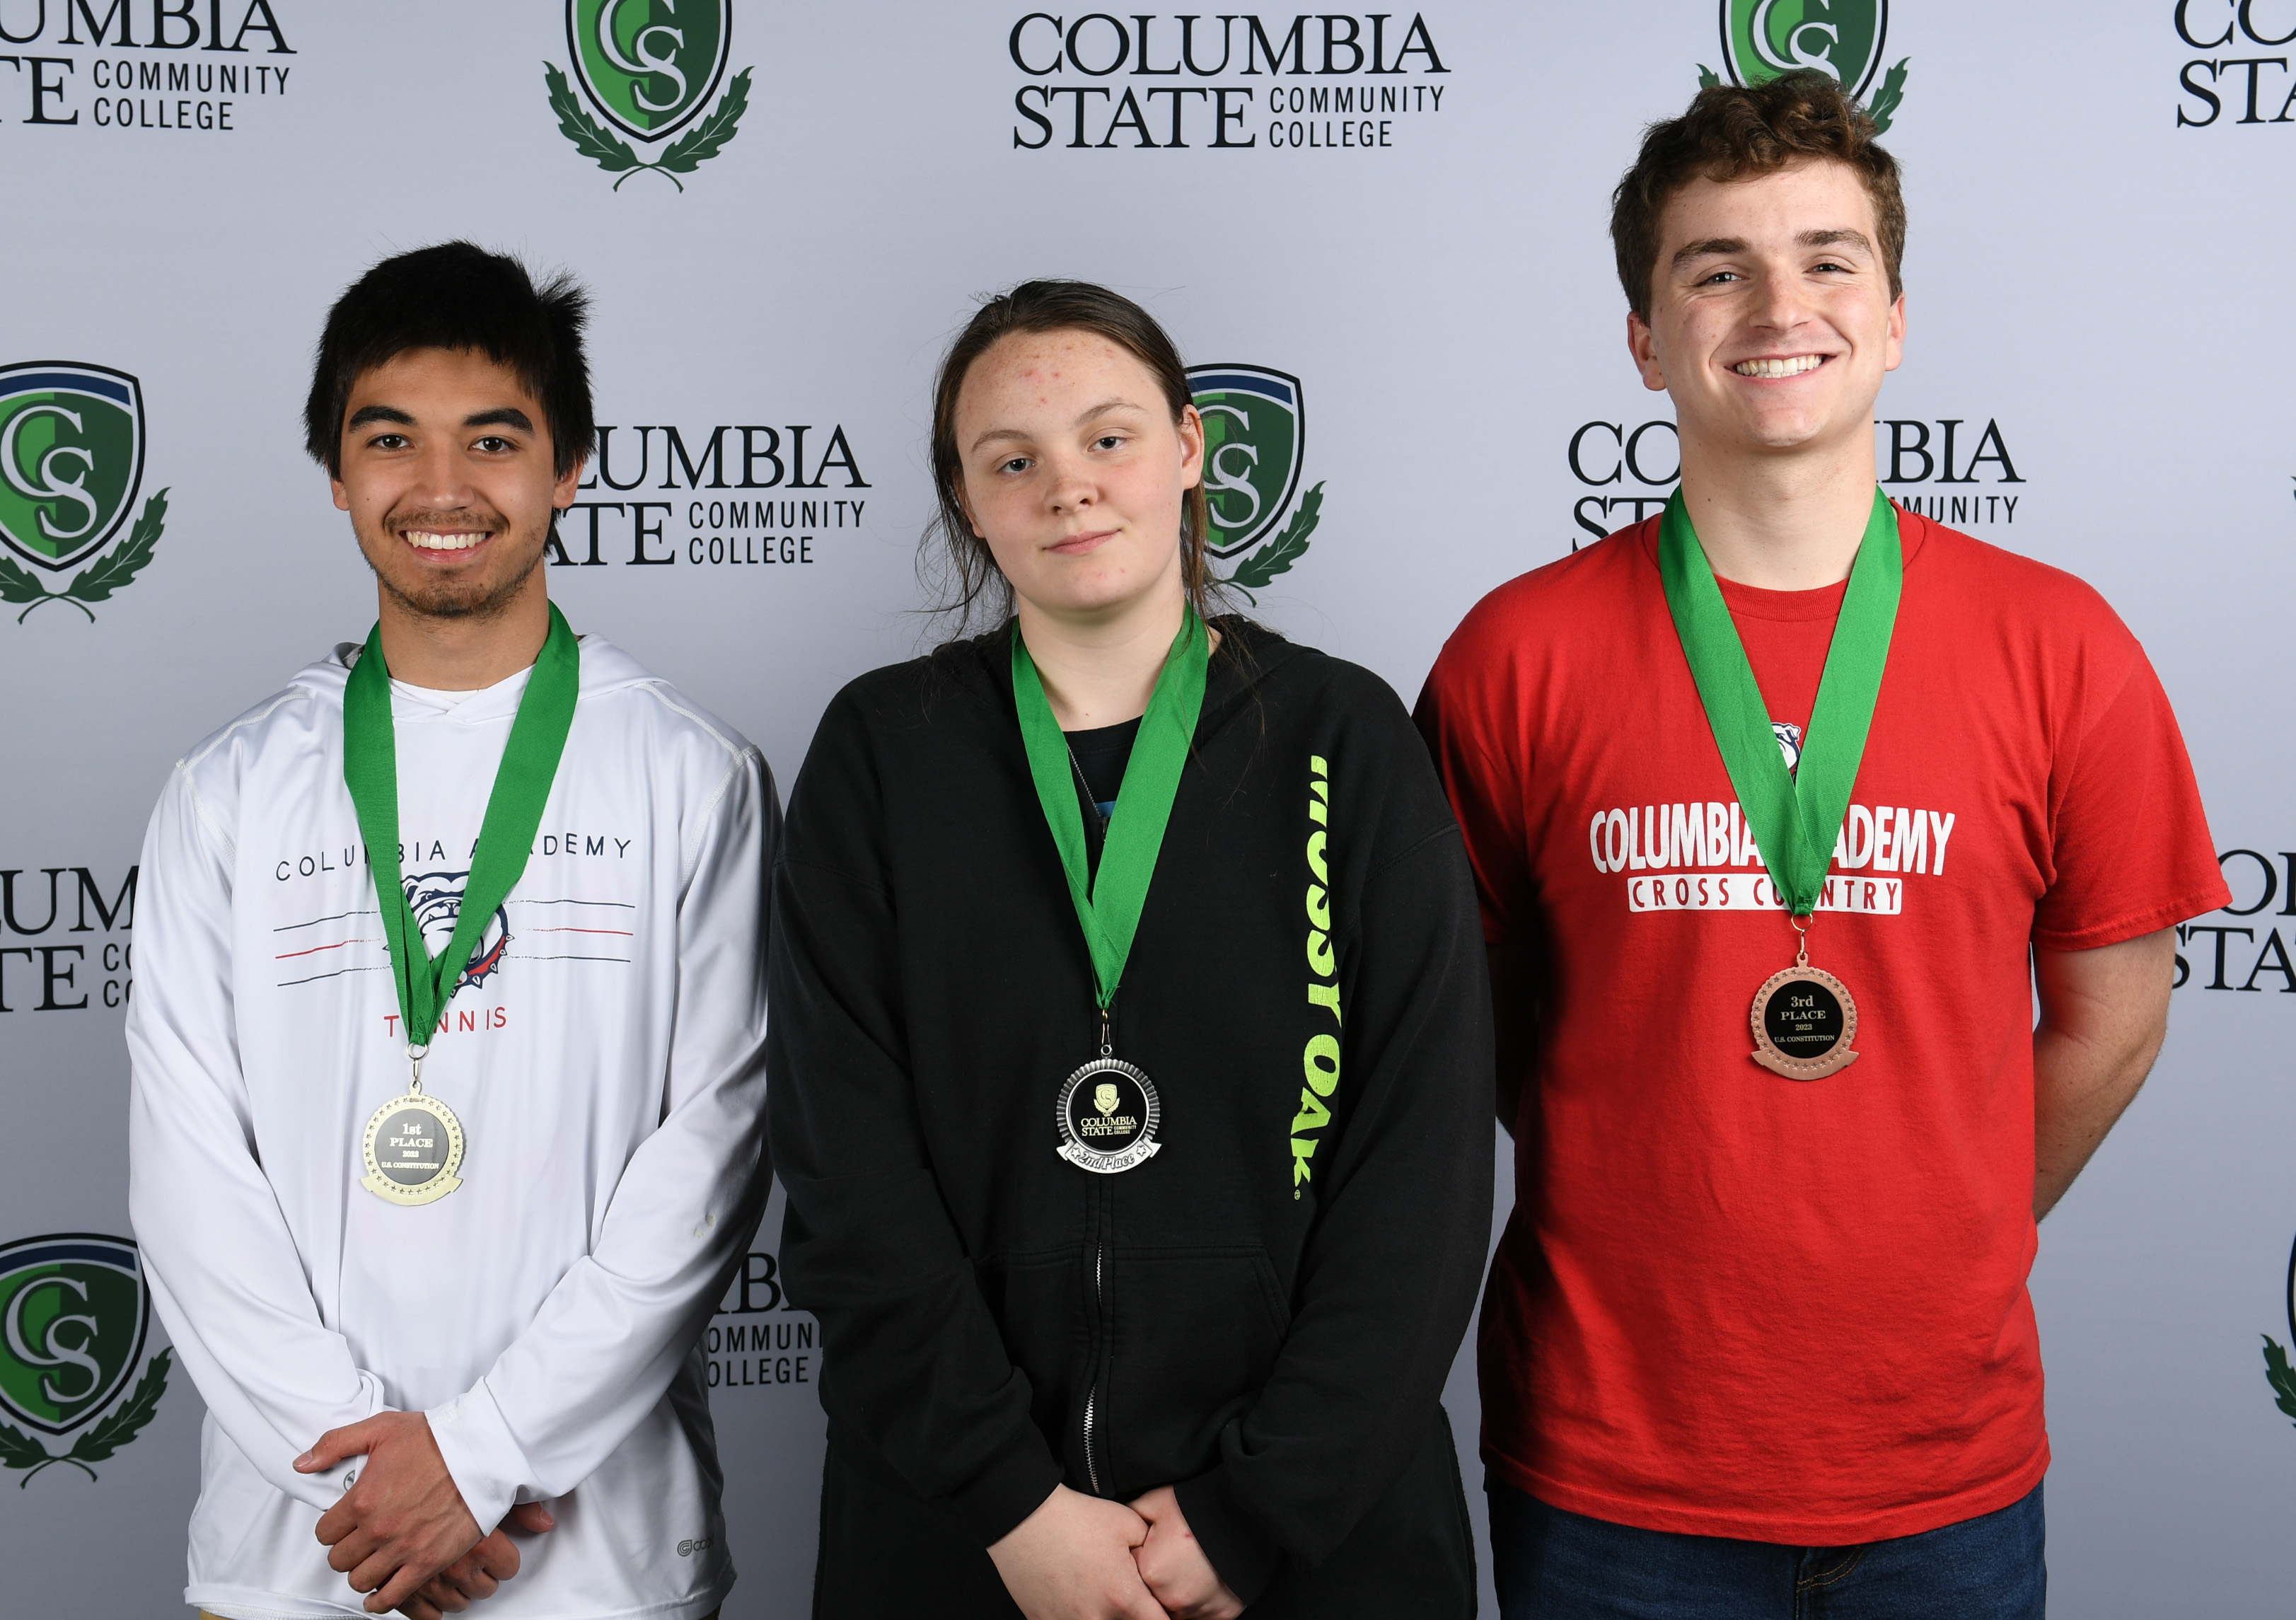 U.S. Competition Winners (left to right): First place winner, Daniel Douglas of Columbia Academy; second place winner, Keilynn Hendricks of Santa Fe Unit School; and third place winner, Ben Murphy of Columbia Academy.